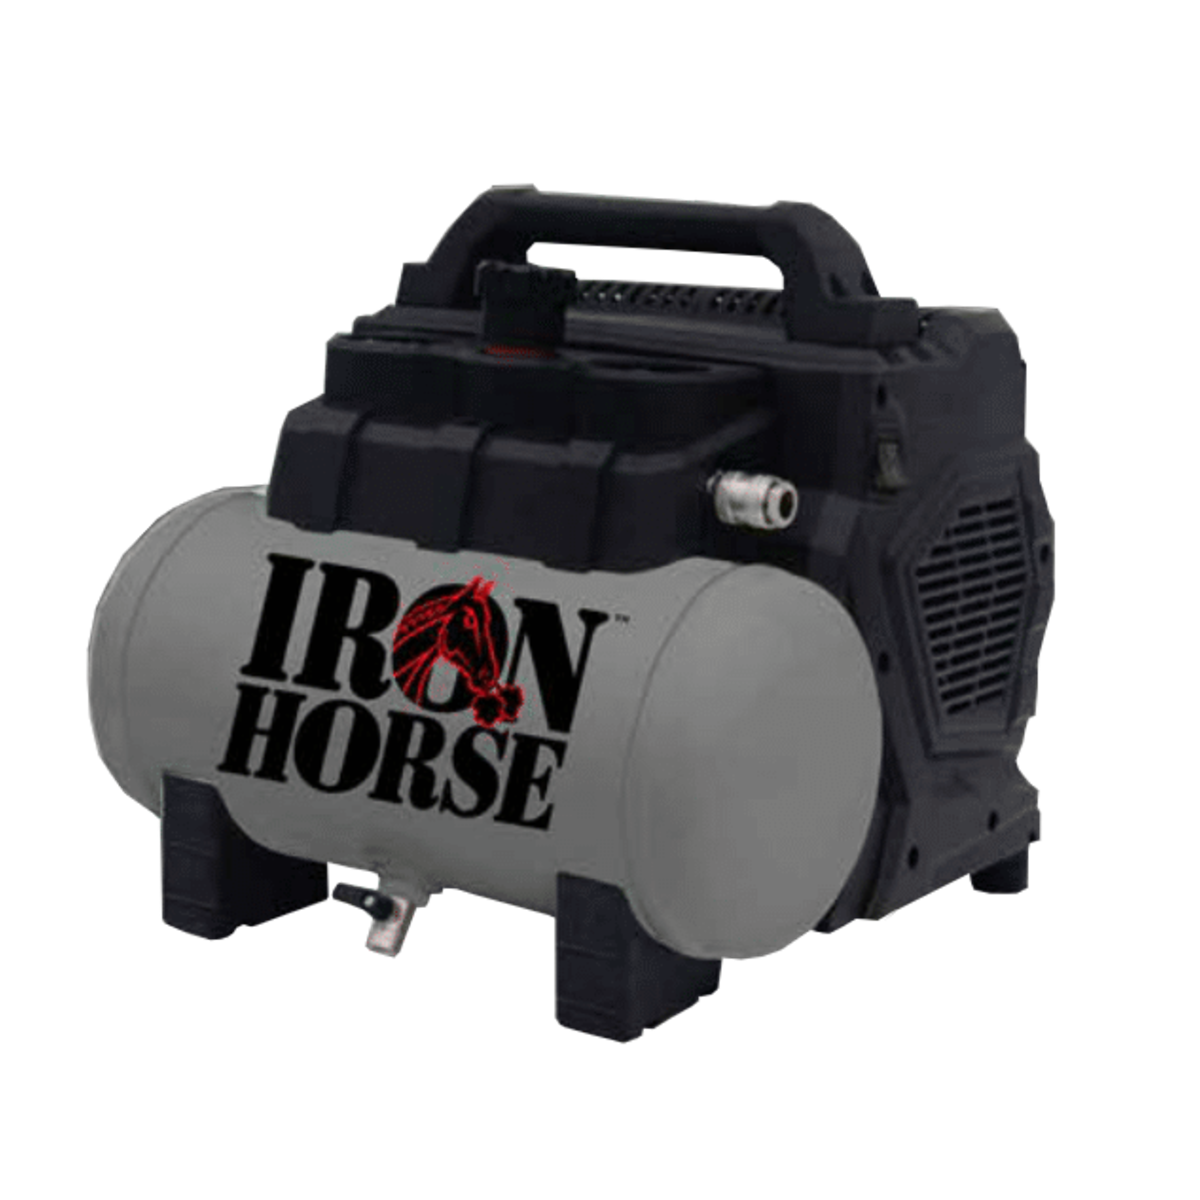 Iron Horse Pro Quiet Series 1 HP 1 5 Gallon Air Compressor